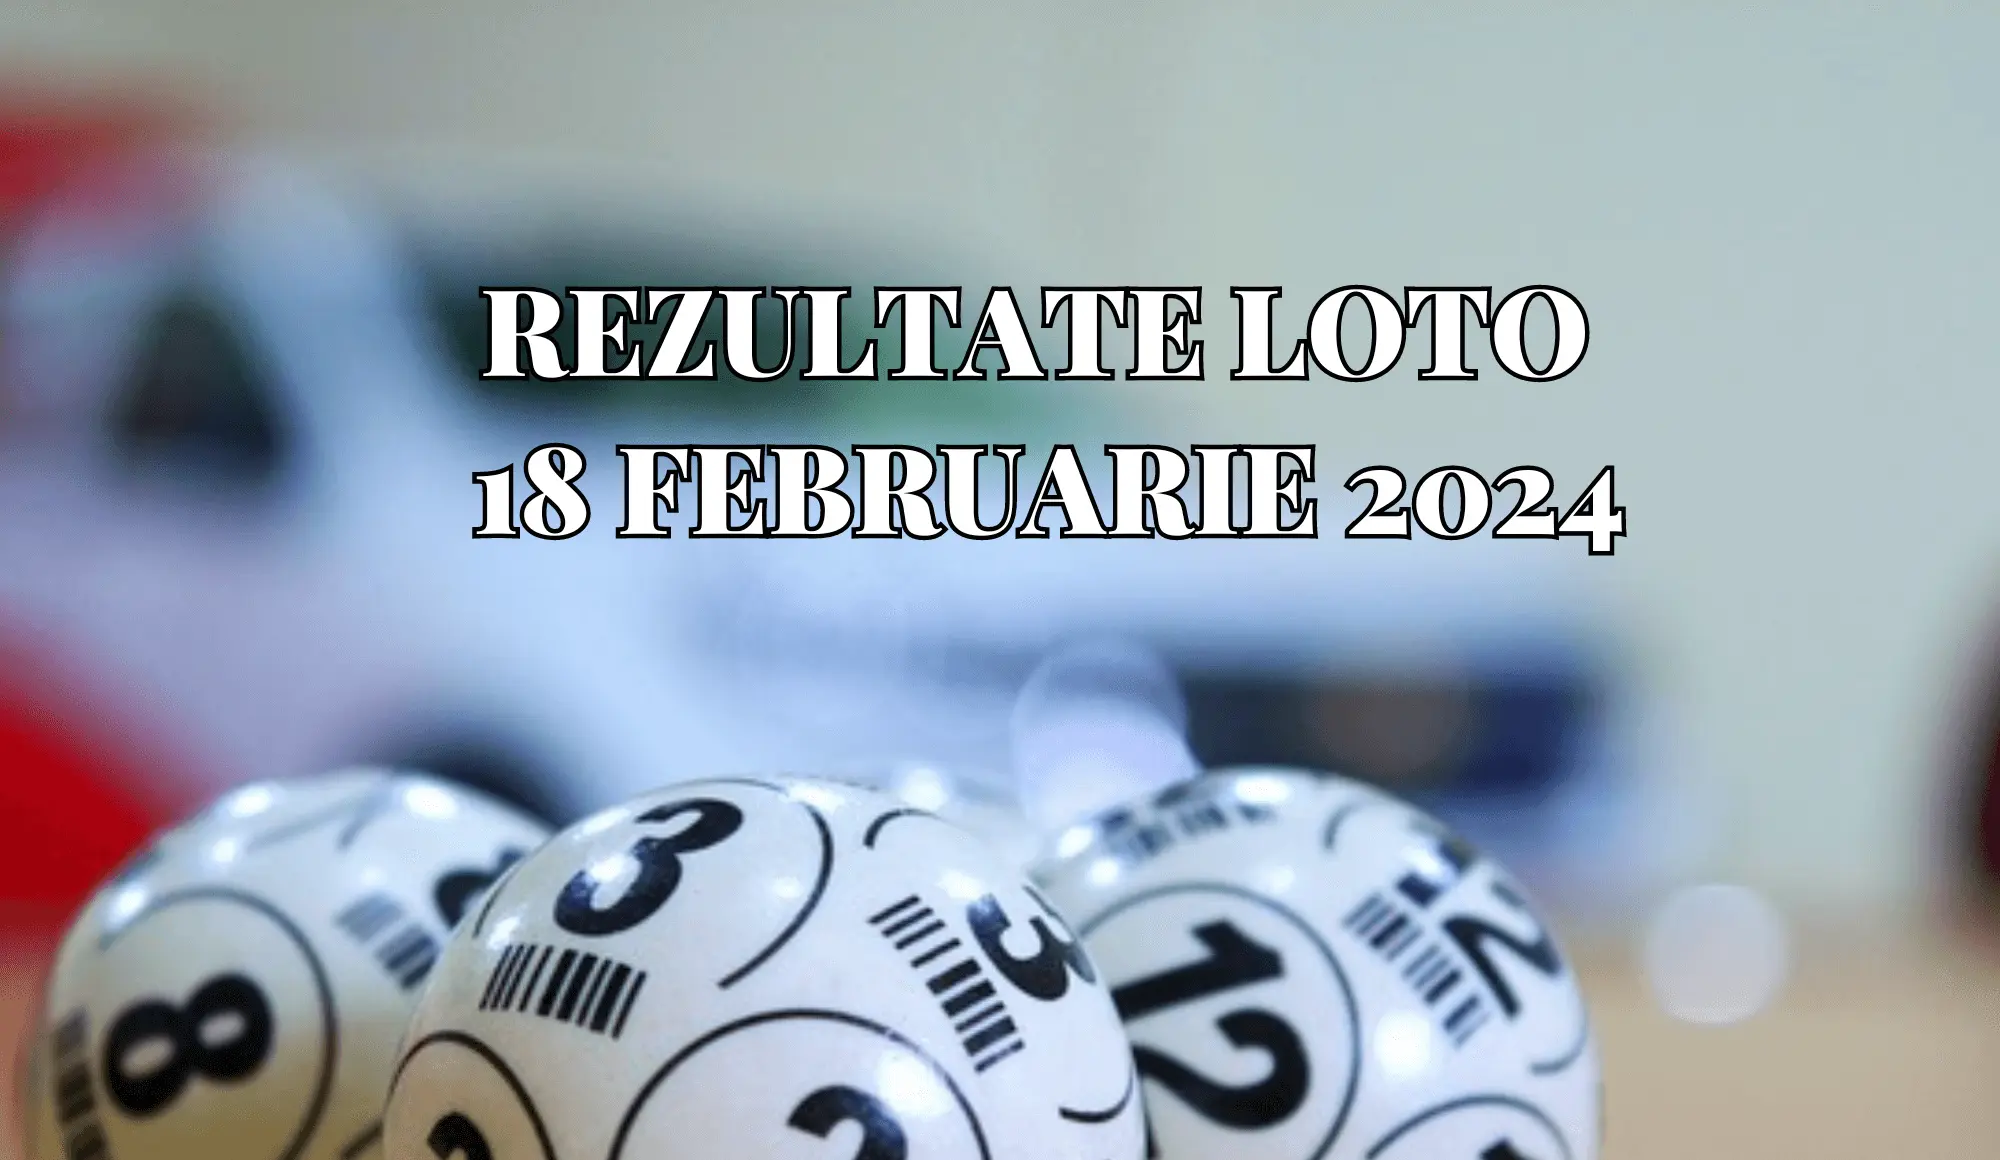 Rezultate Loto 15 februarie 2024 – Loto 6/49, Loto 5/40, Joker și Noroc